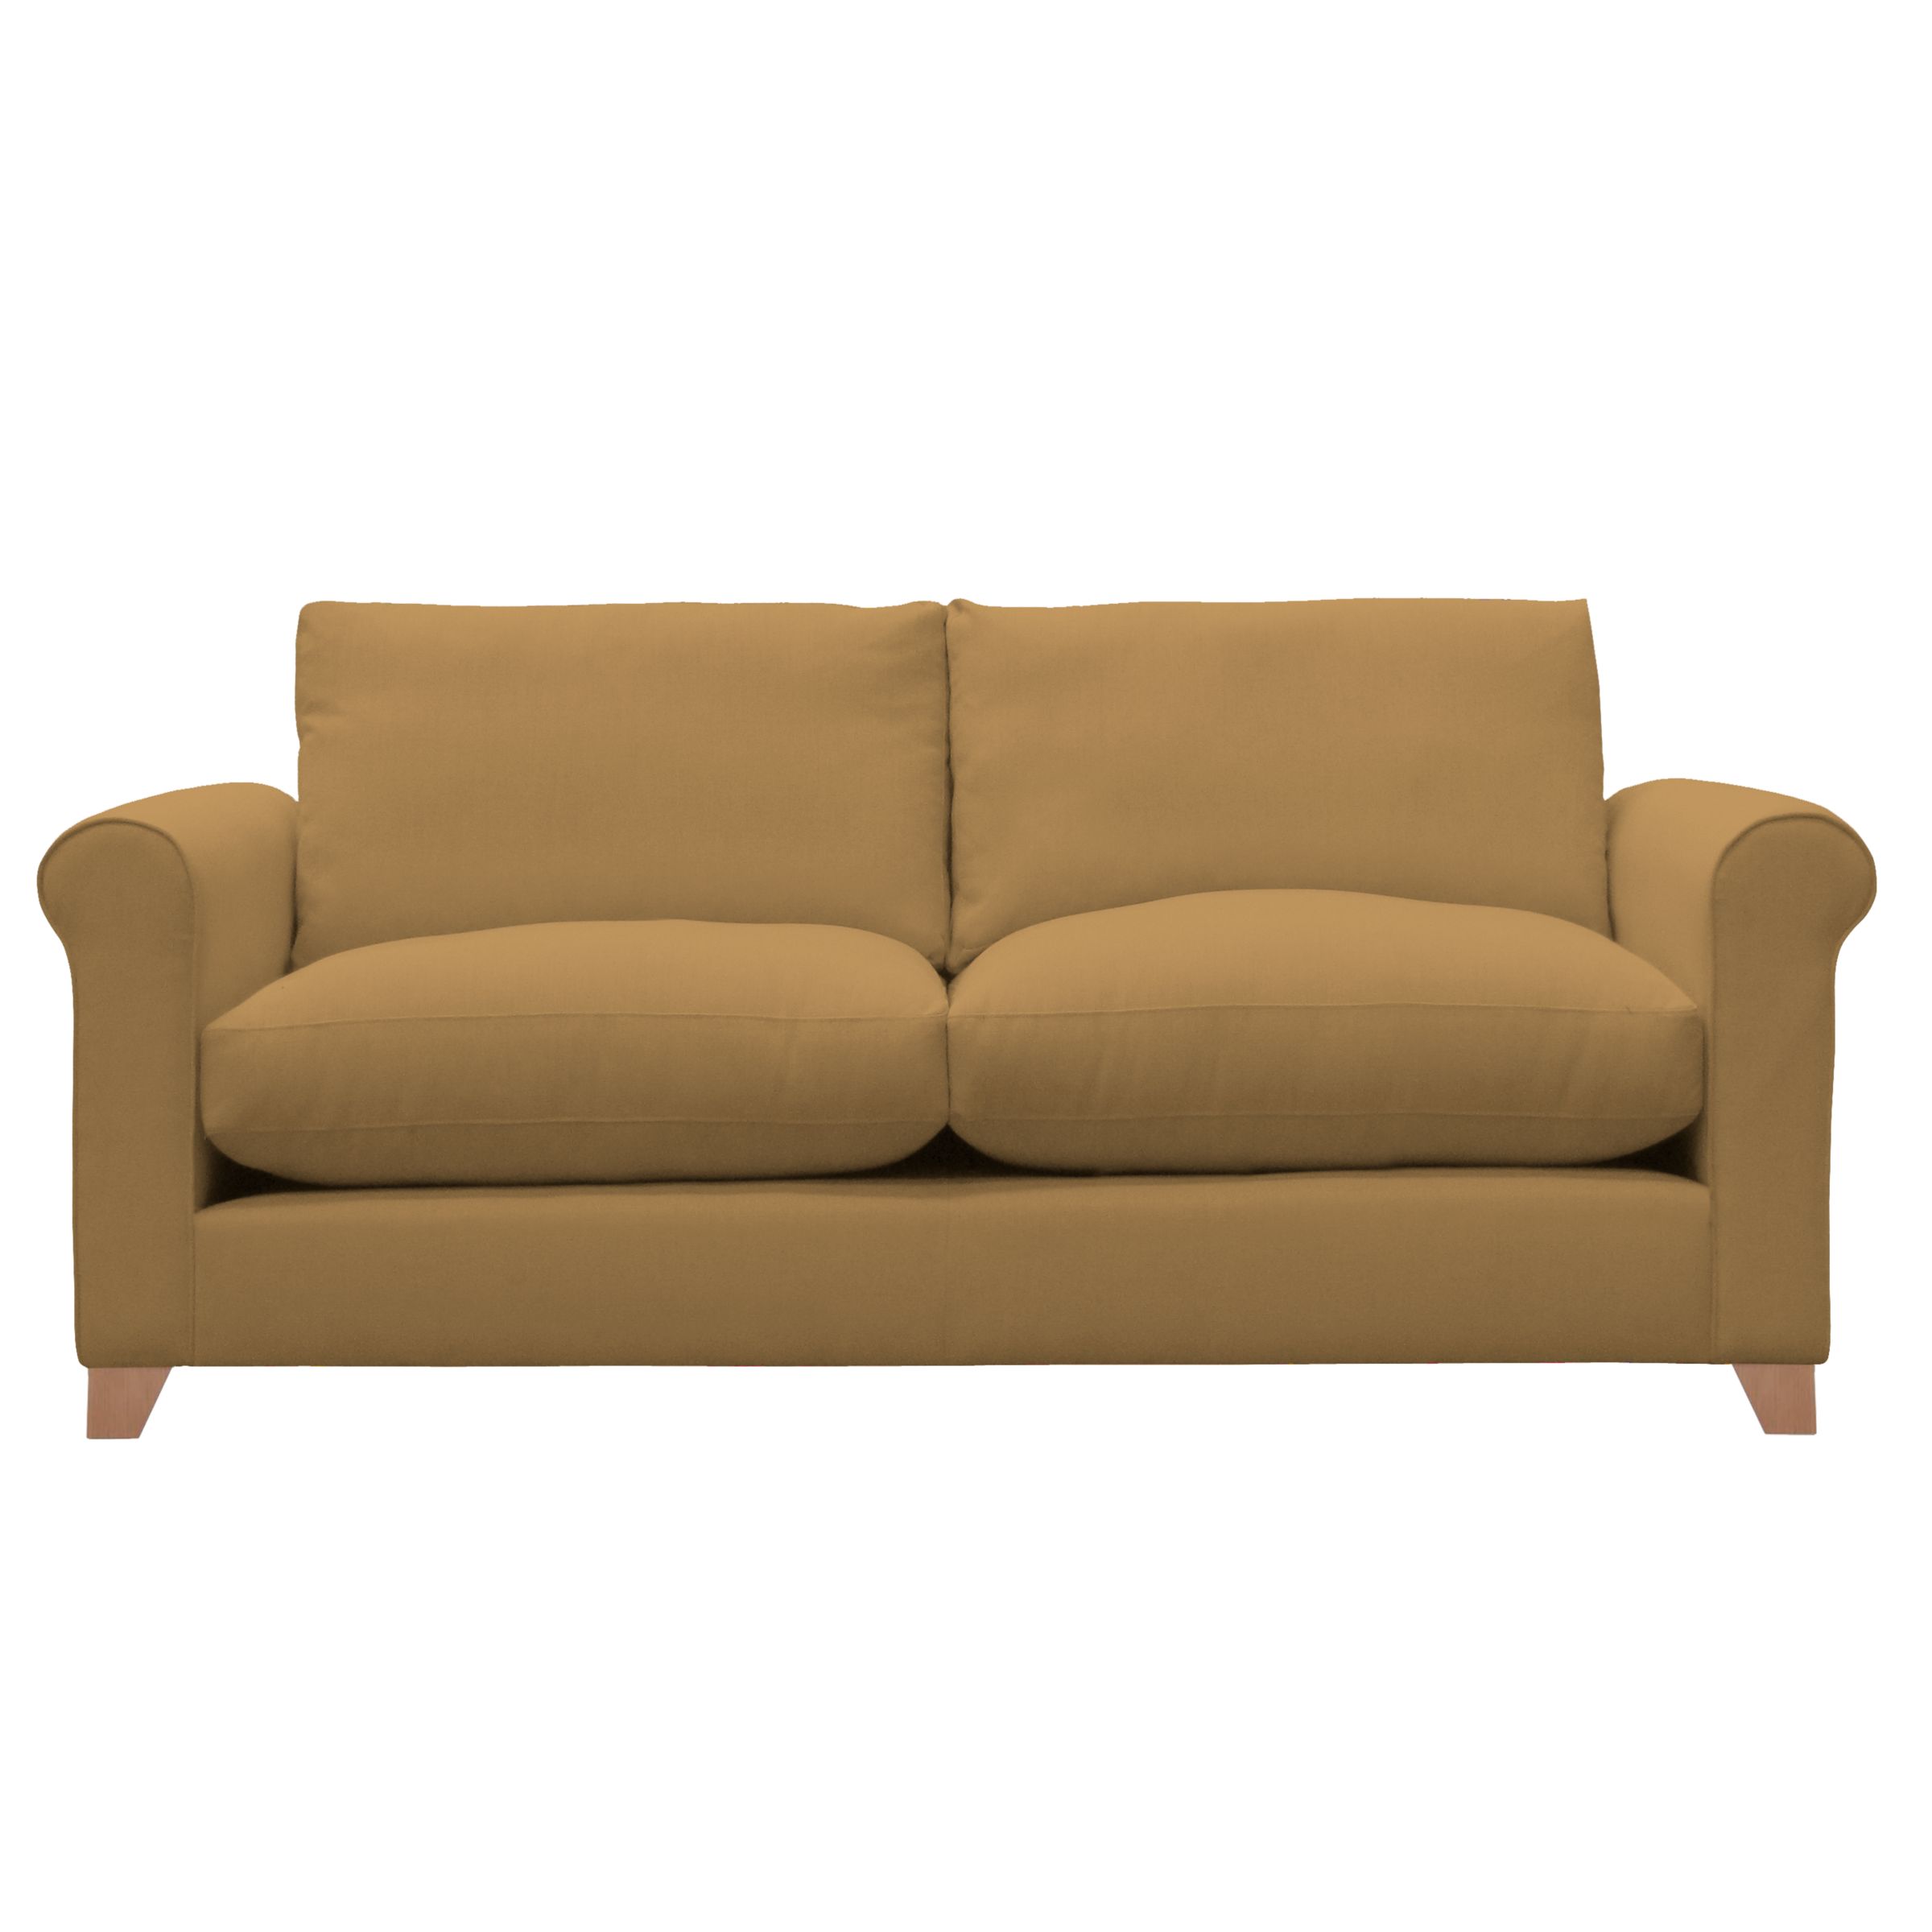 John Lewis Options Scroll Arm Large Sofa, Linley Cafe, width 192cm